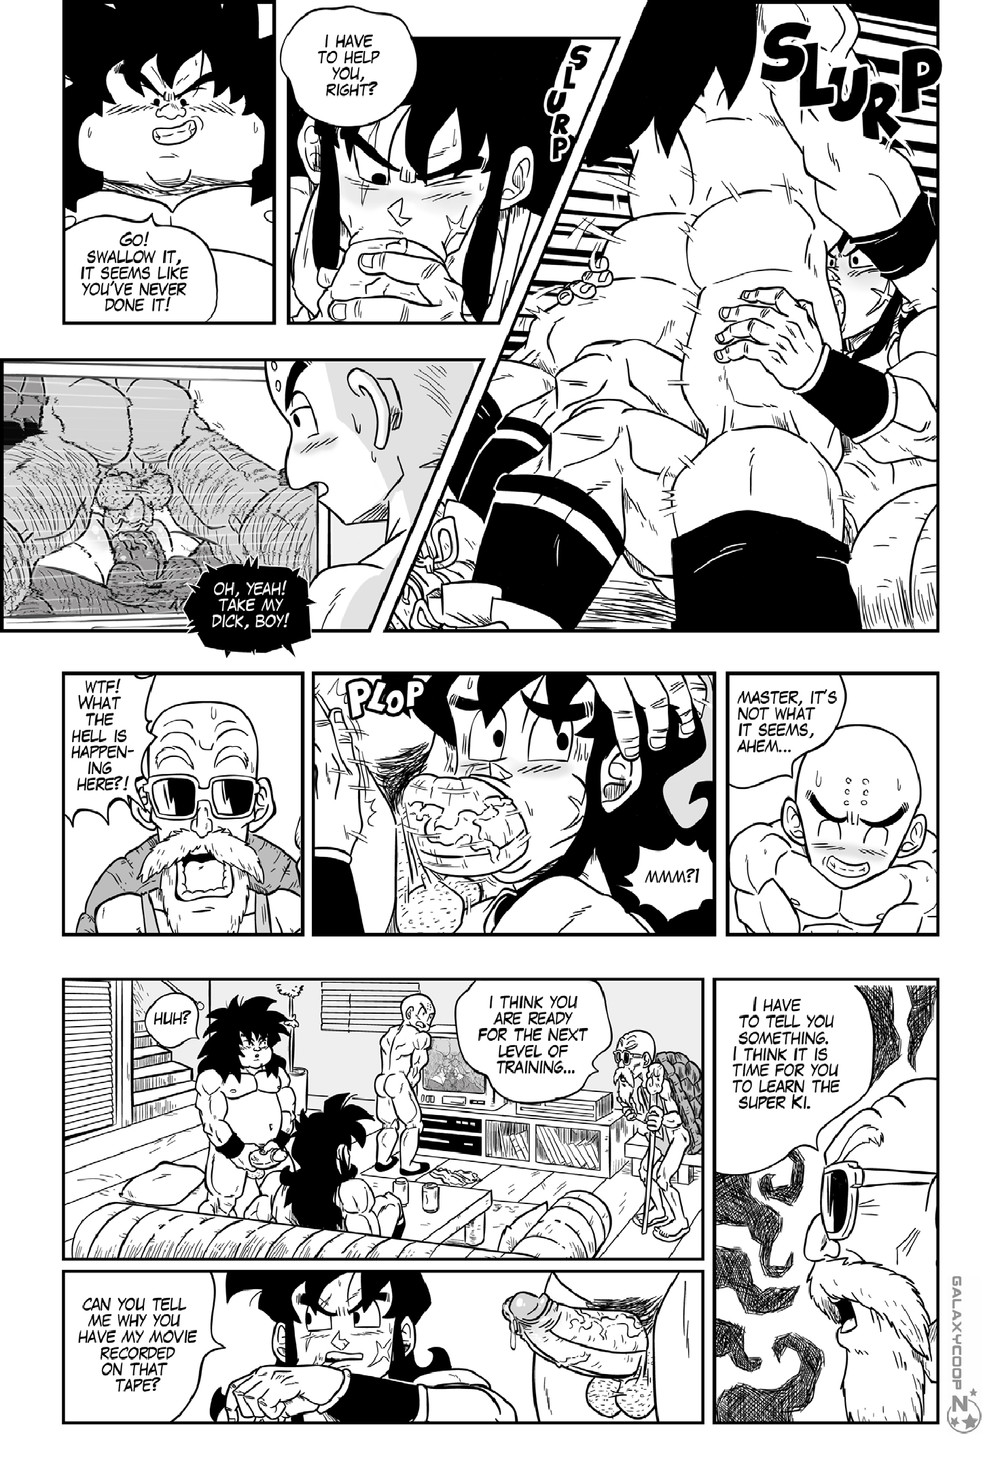 Post 5971141 Comic Dragon Ball Series Galaxycoopz Krillin Master Roshi Yajirobe Yamcha